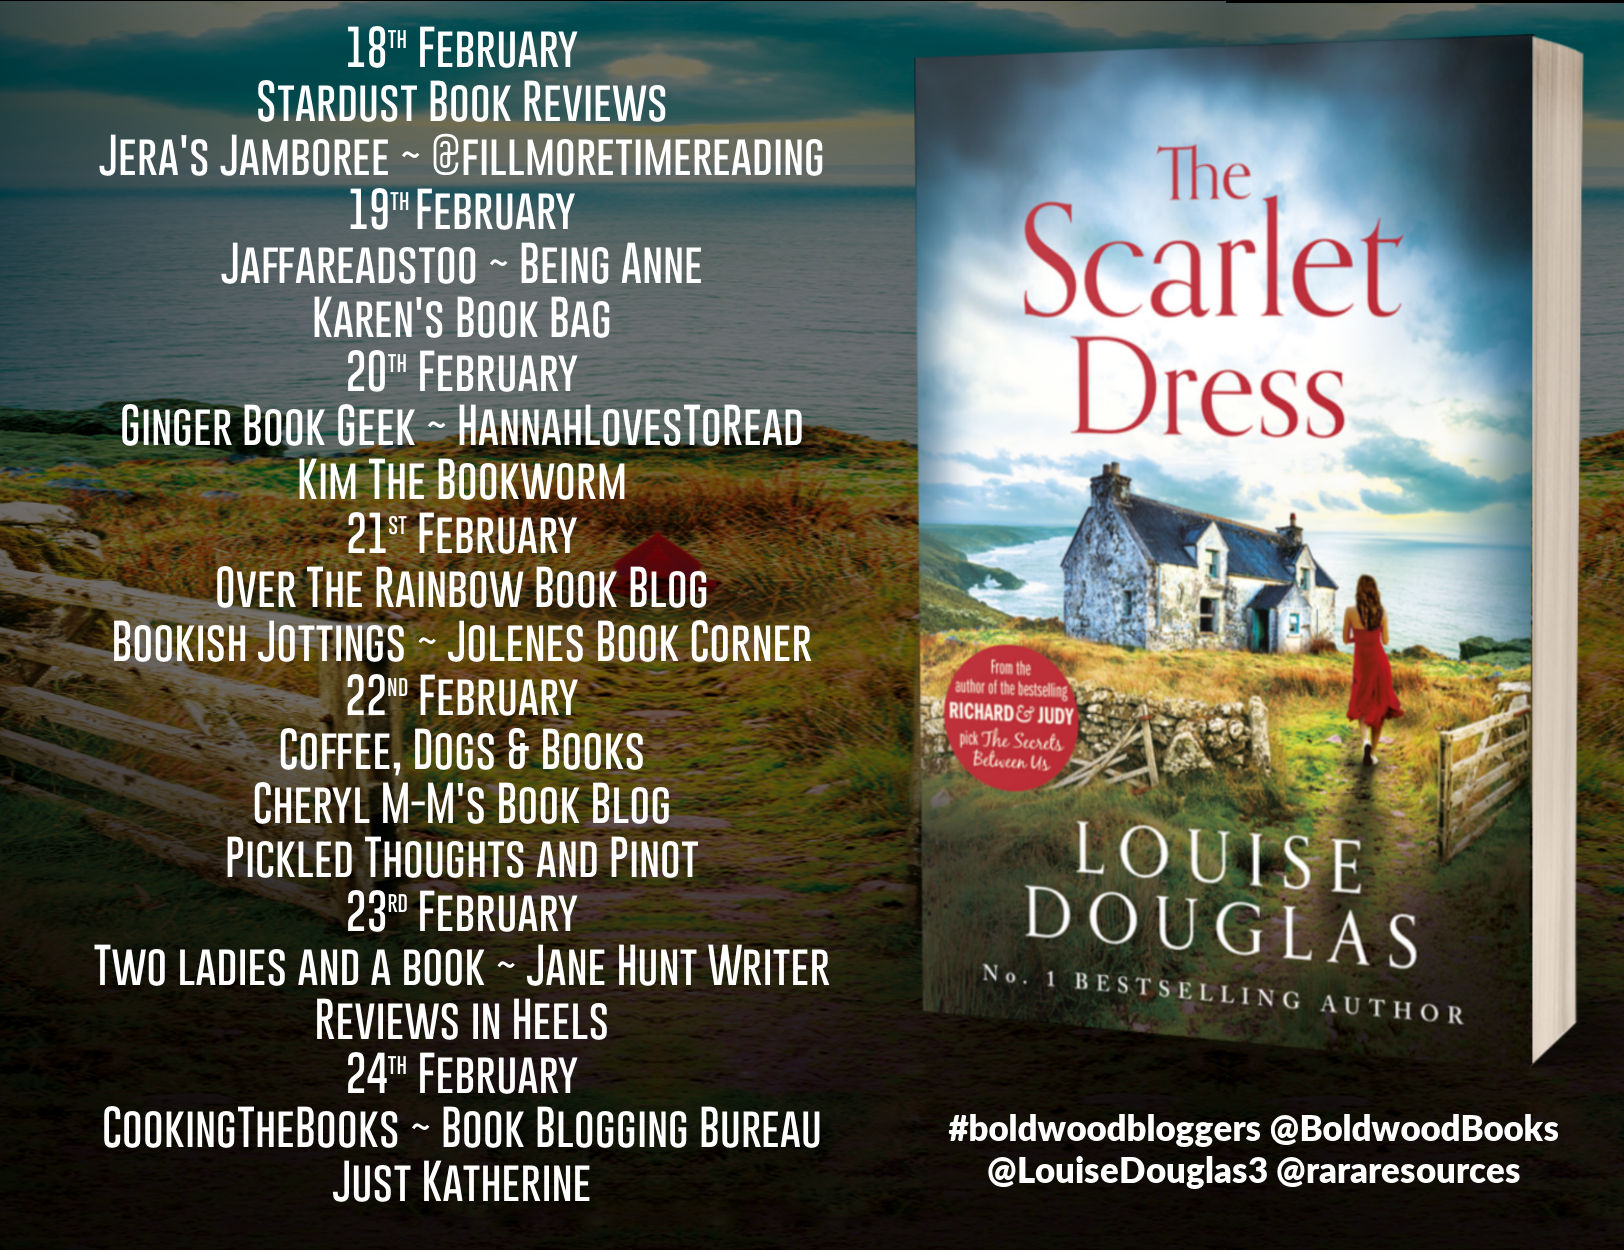 The Secrets Between Us by Louise Douglas